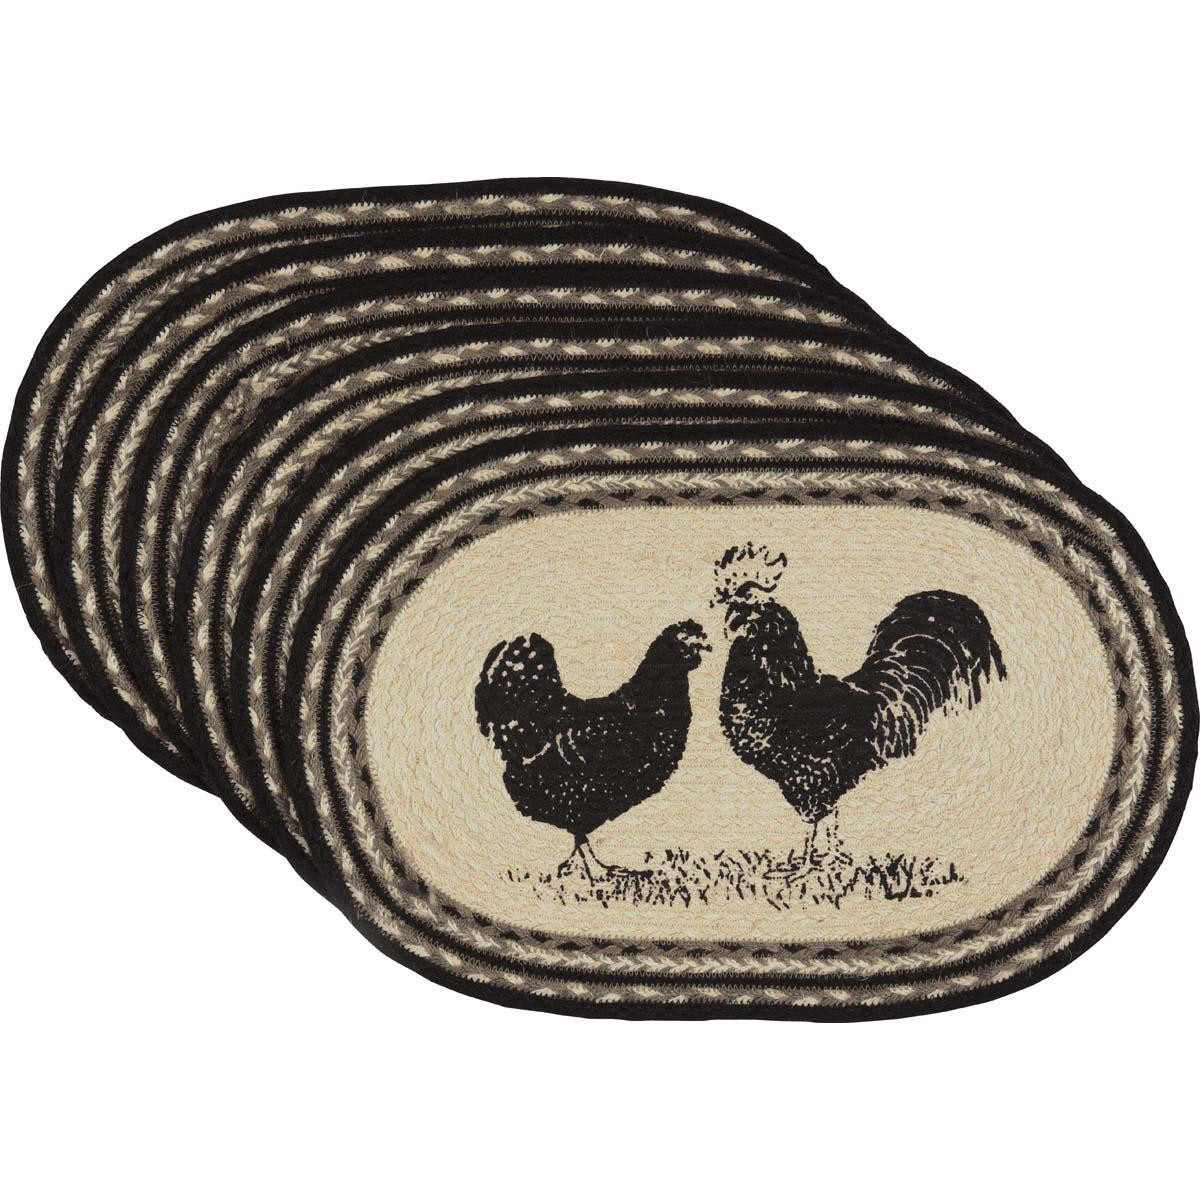 Sawyer Mill Poultry Jute Placemat Set - 840528160585